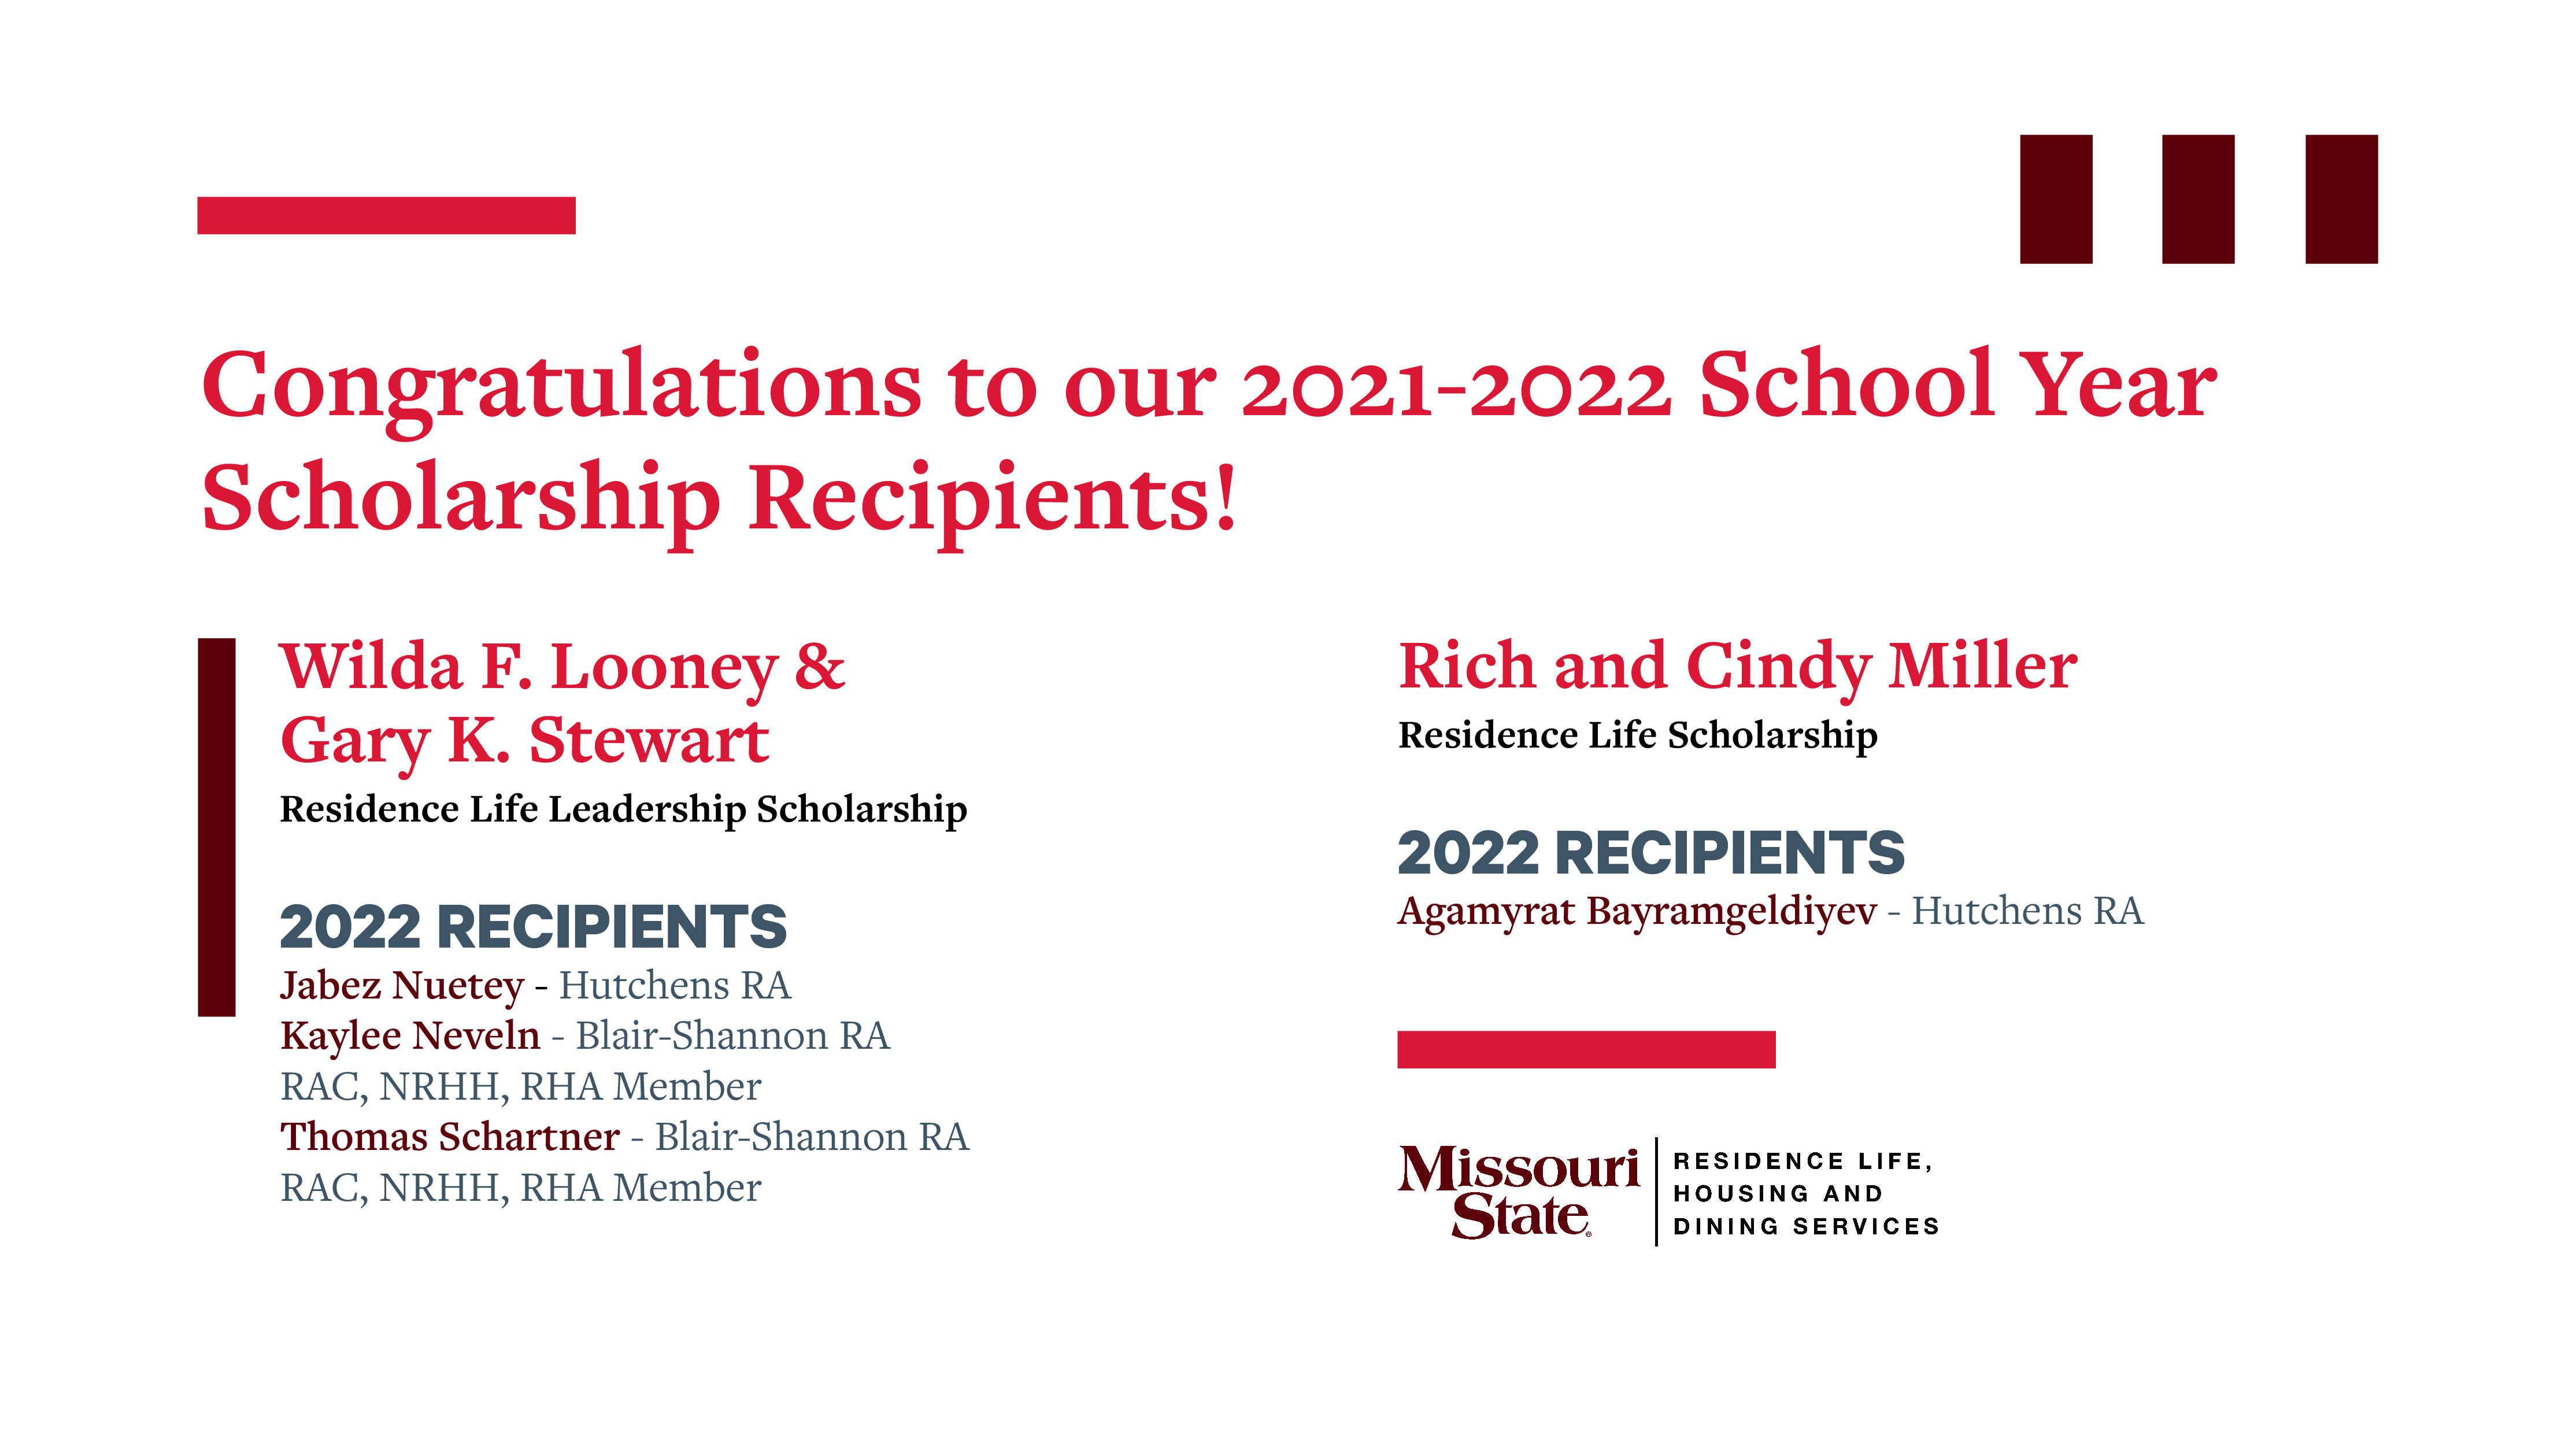 Congratulations to our 2022-2023 School Year Scholarship Recipients. 